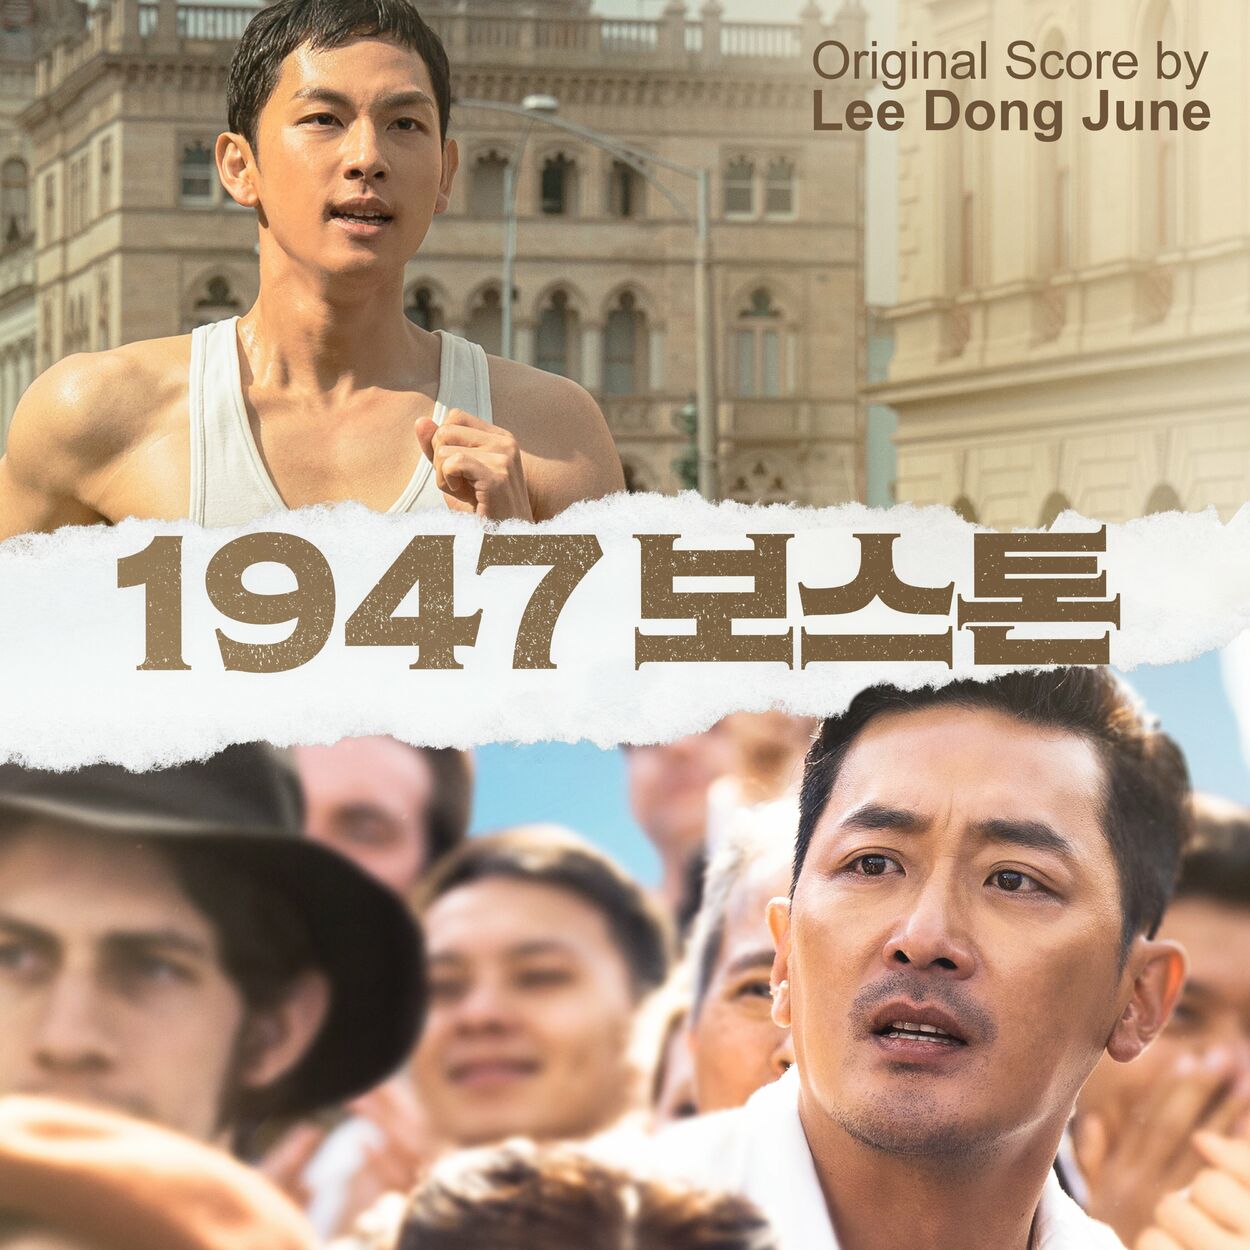 Lee Dong June – Movie “1947 Road to Boston” (Original Movie Soundtrack Score)